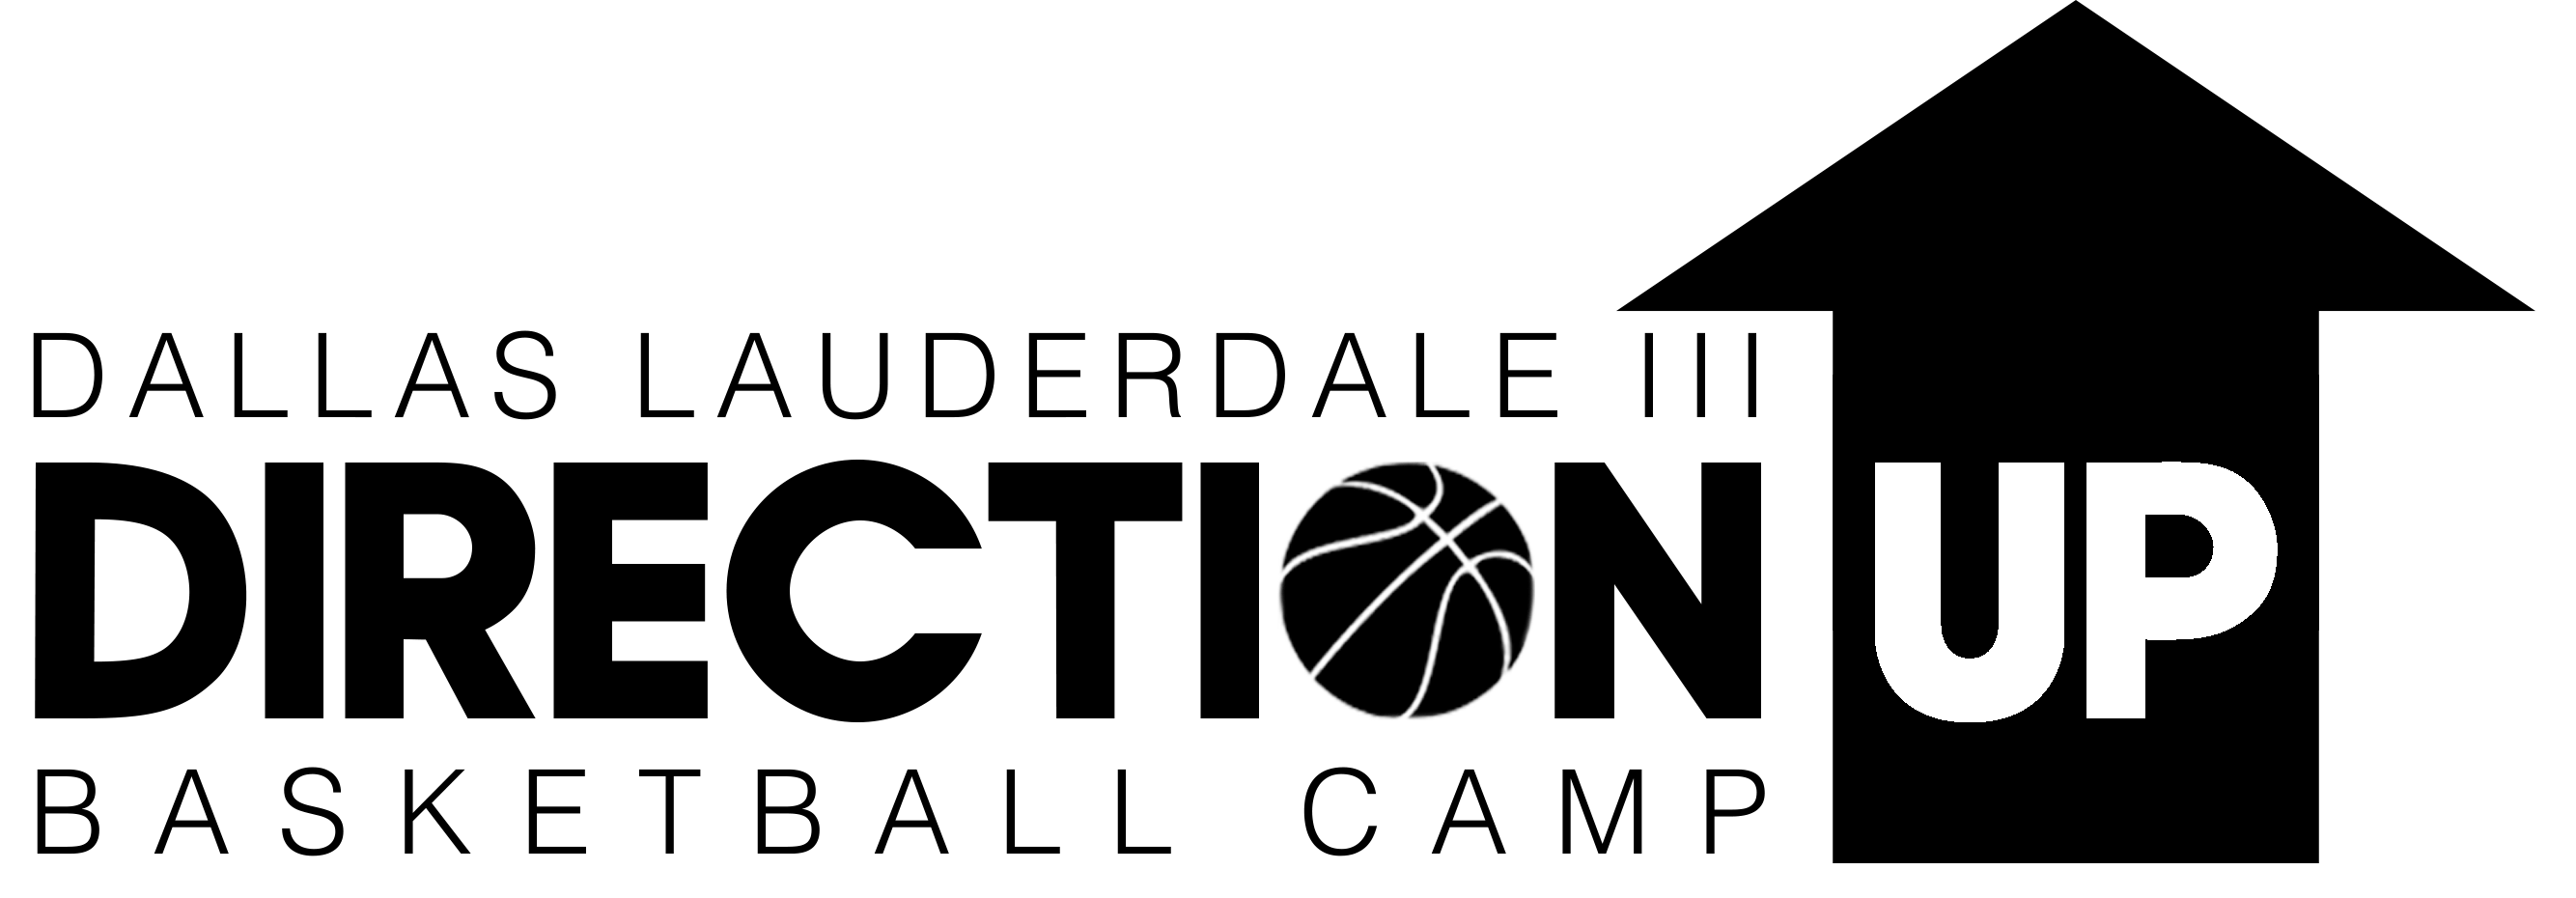 Direction Up Basketball logo